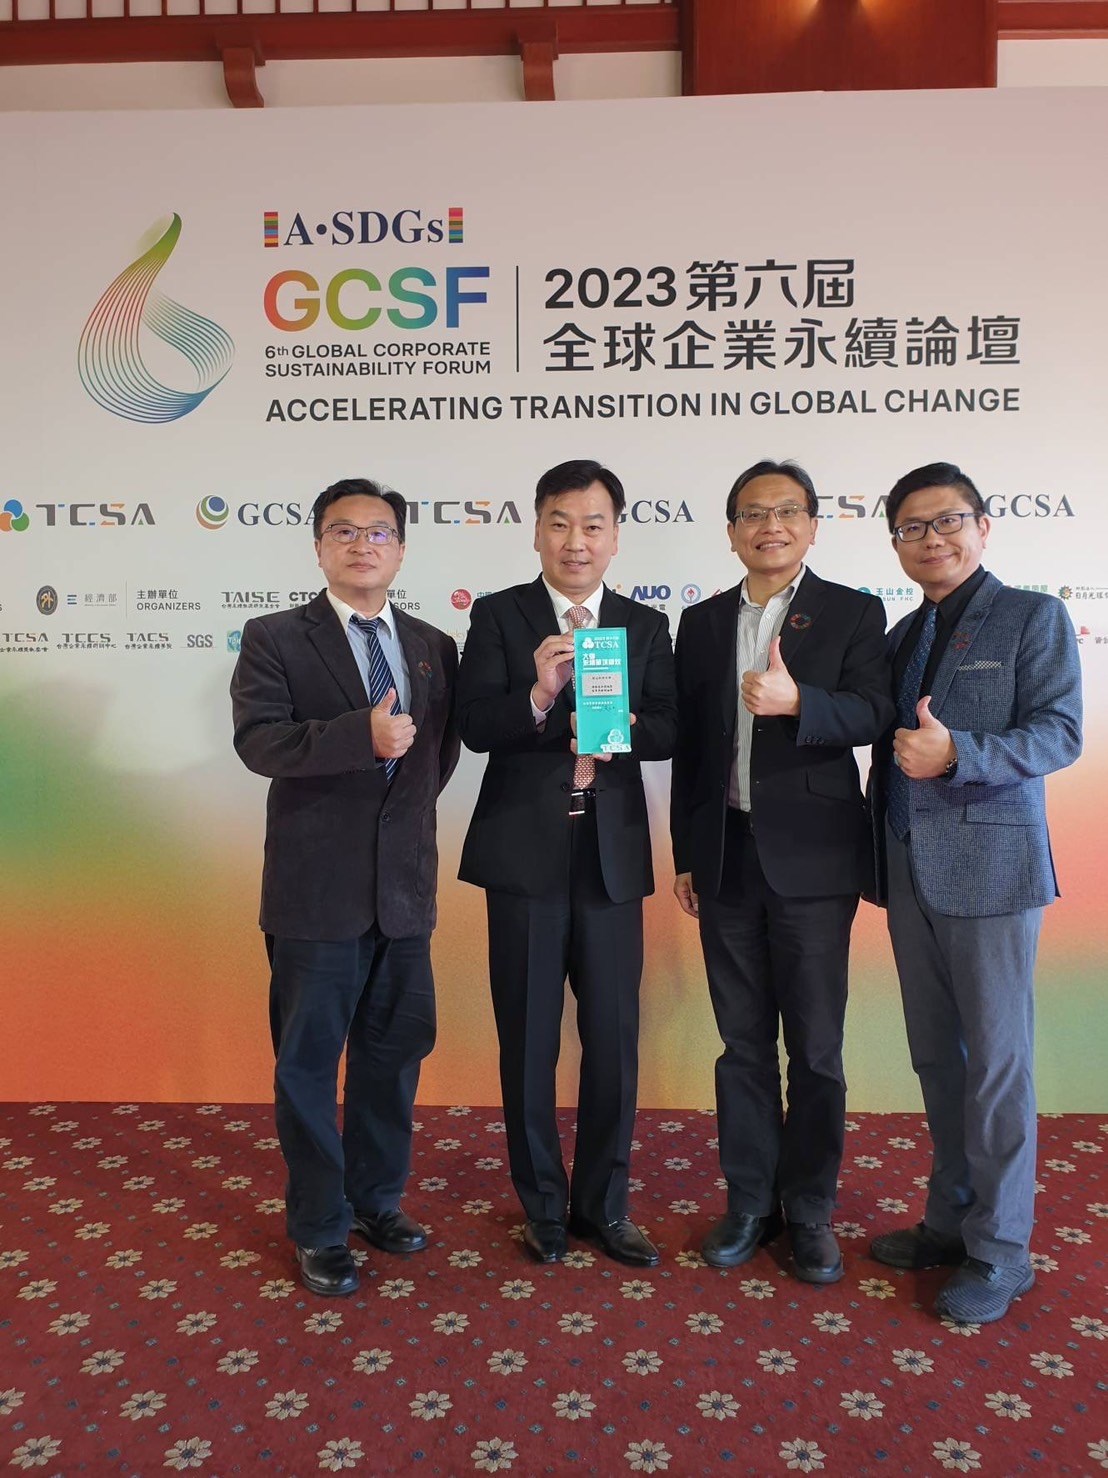 01.KSU Wins 2023 'TCSA Taiwan Corporate Sustainability Awards' for Circular Economy and Social Inclusion Leadership